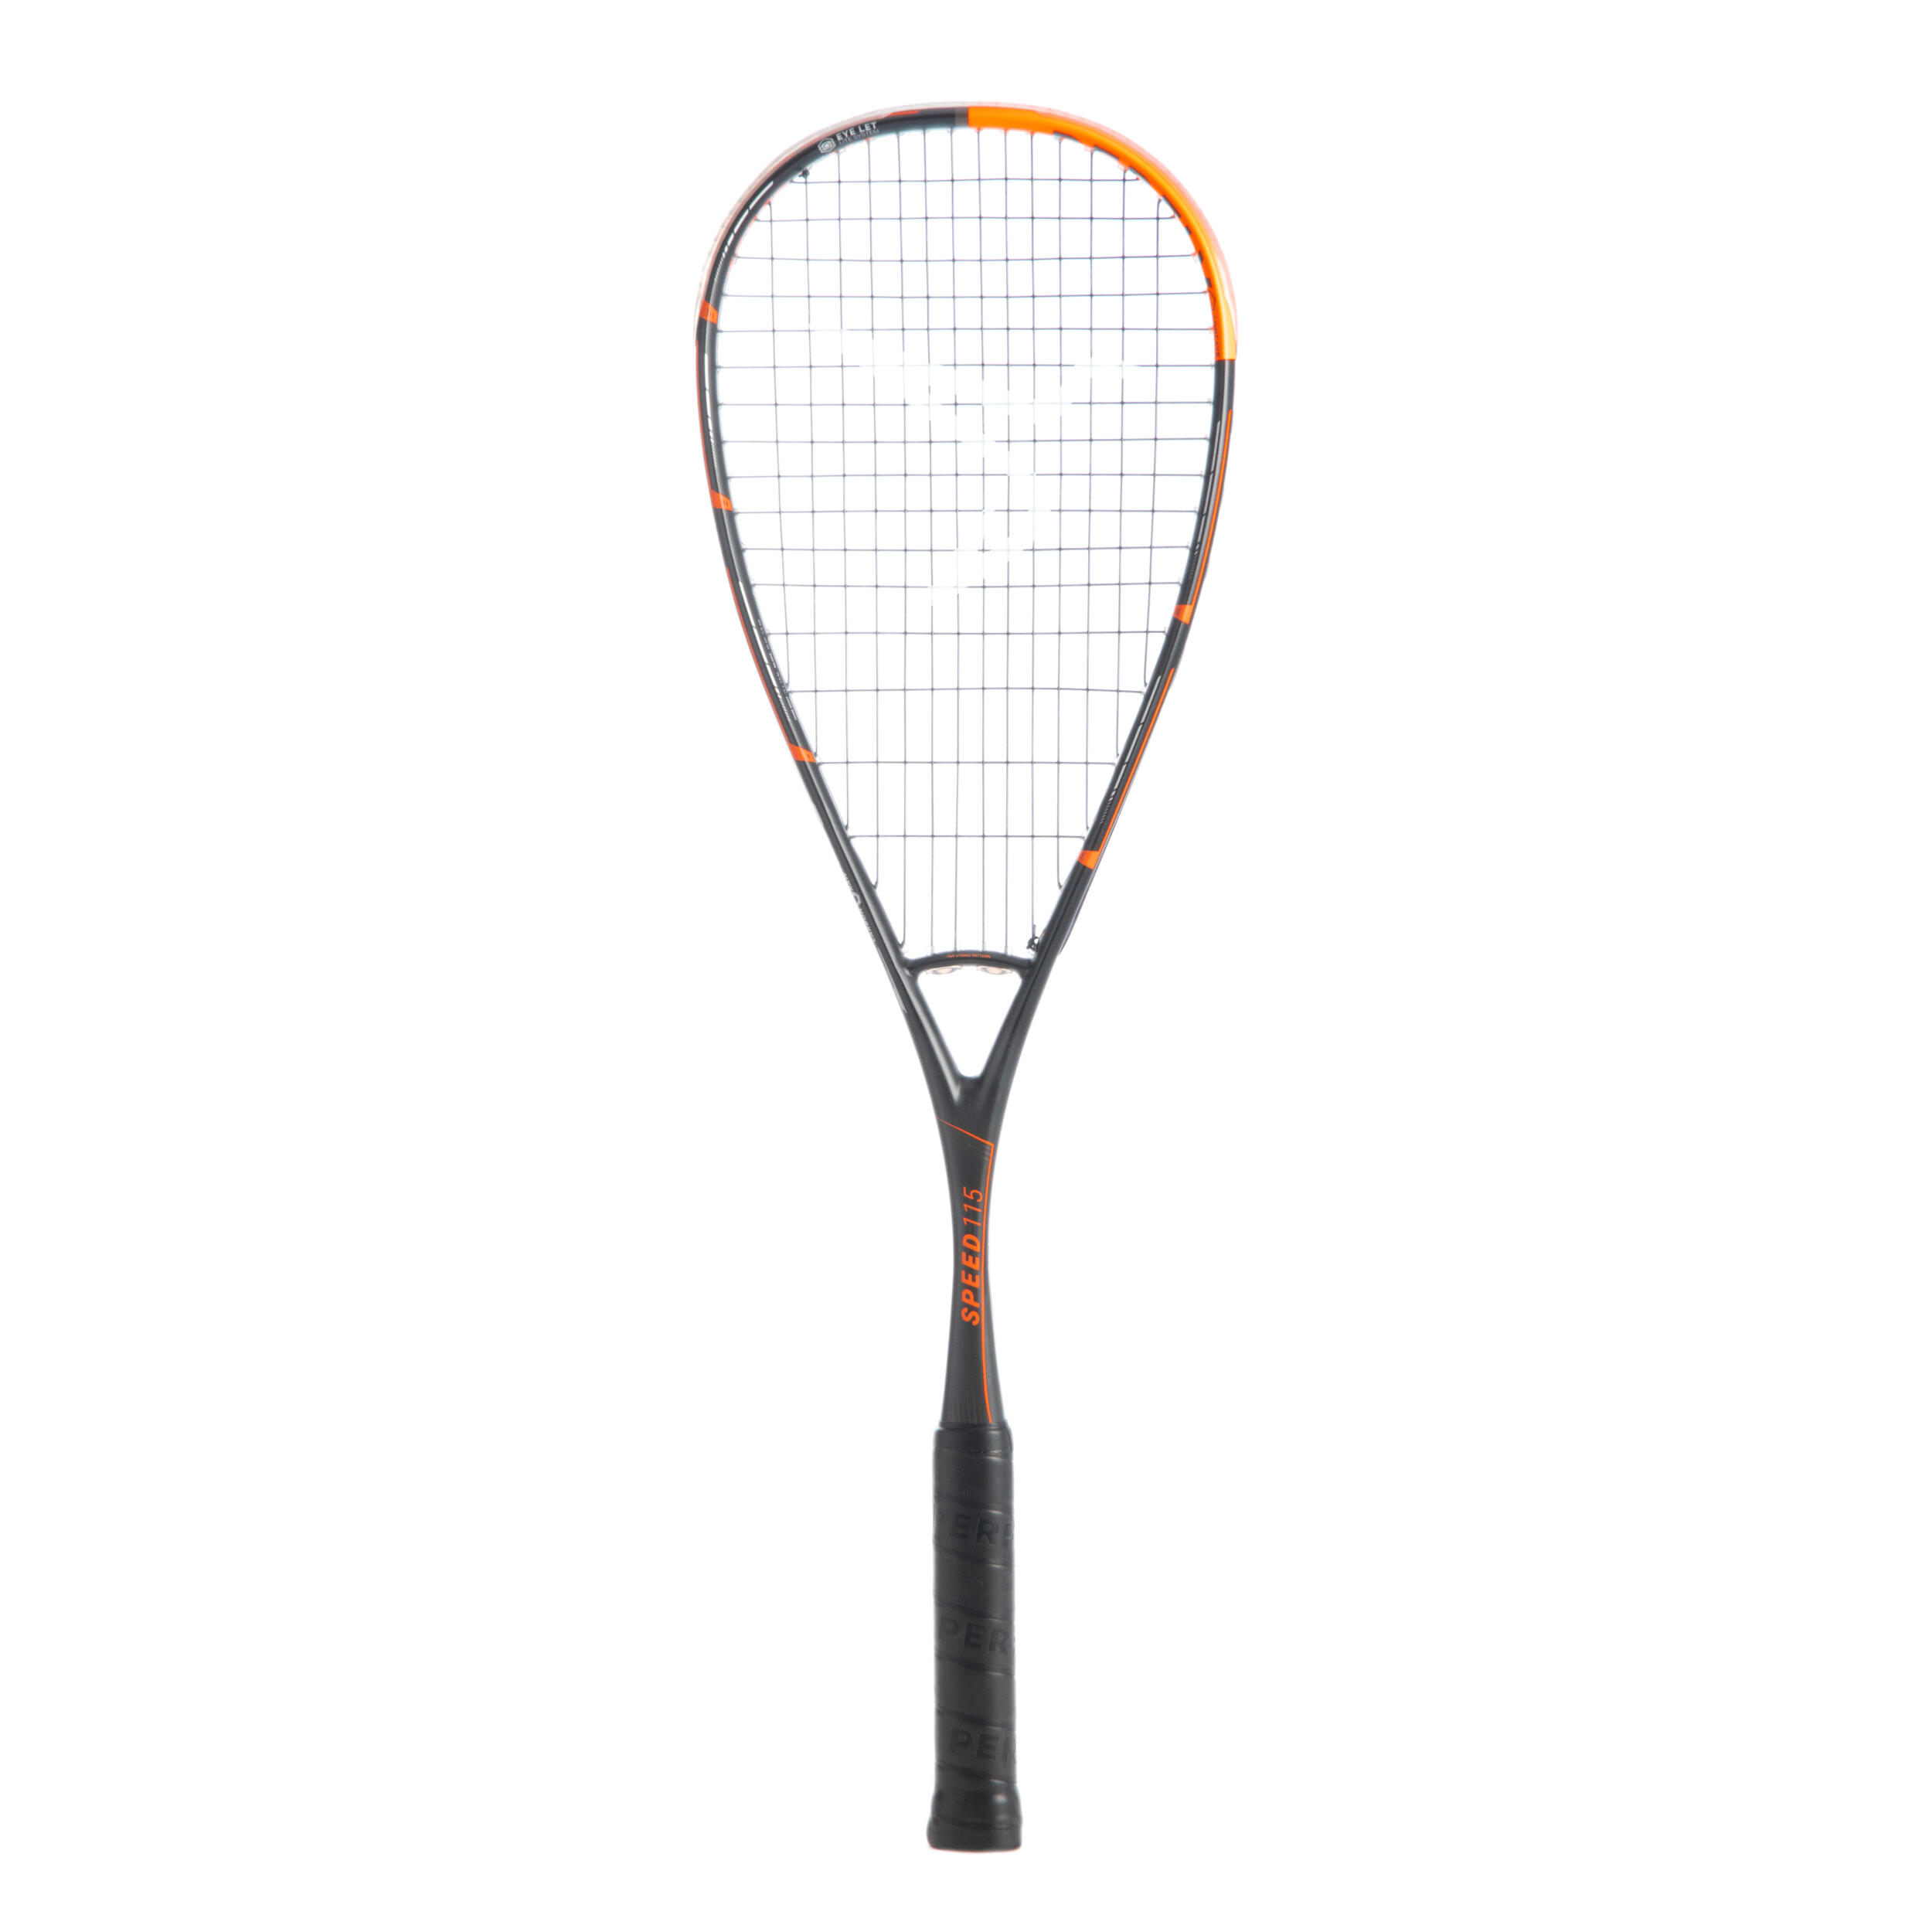 Rachetă Squash Speed 115 Adulți 115  Rachete si huse squash